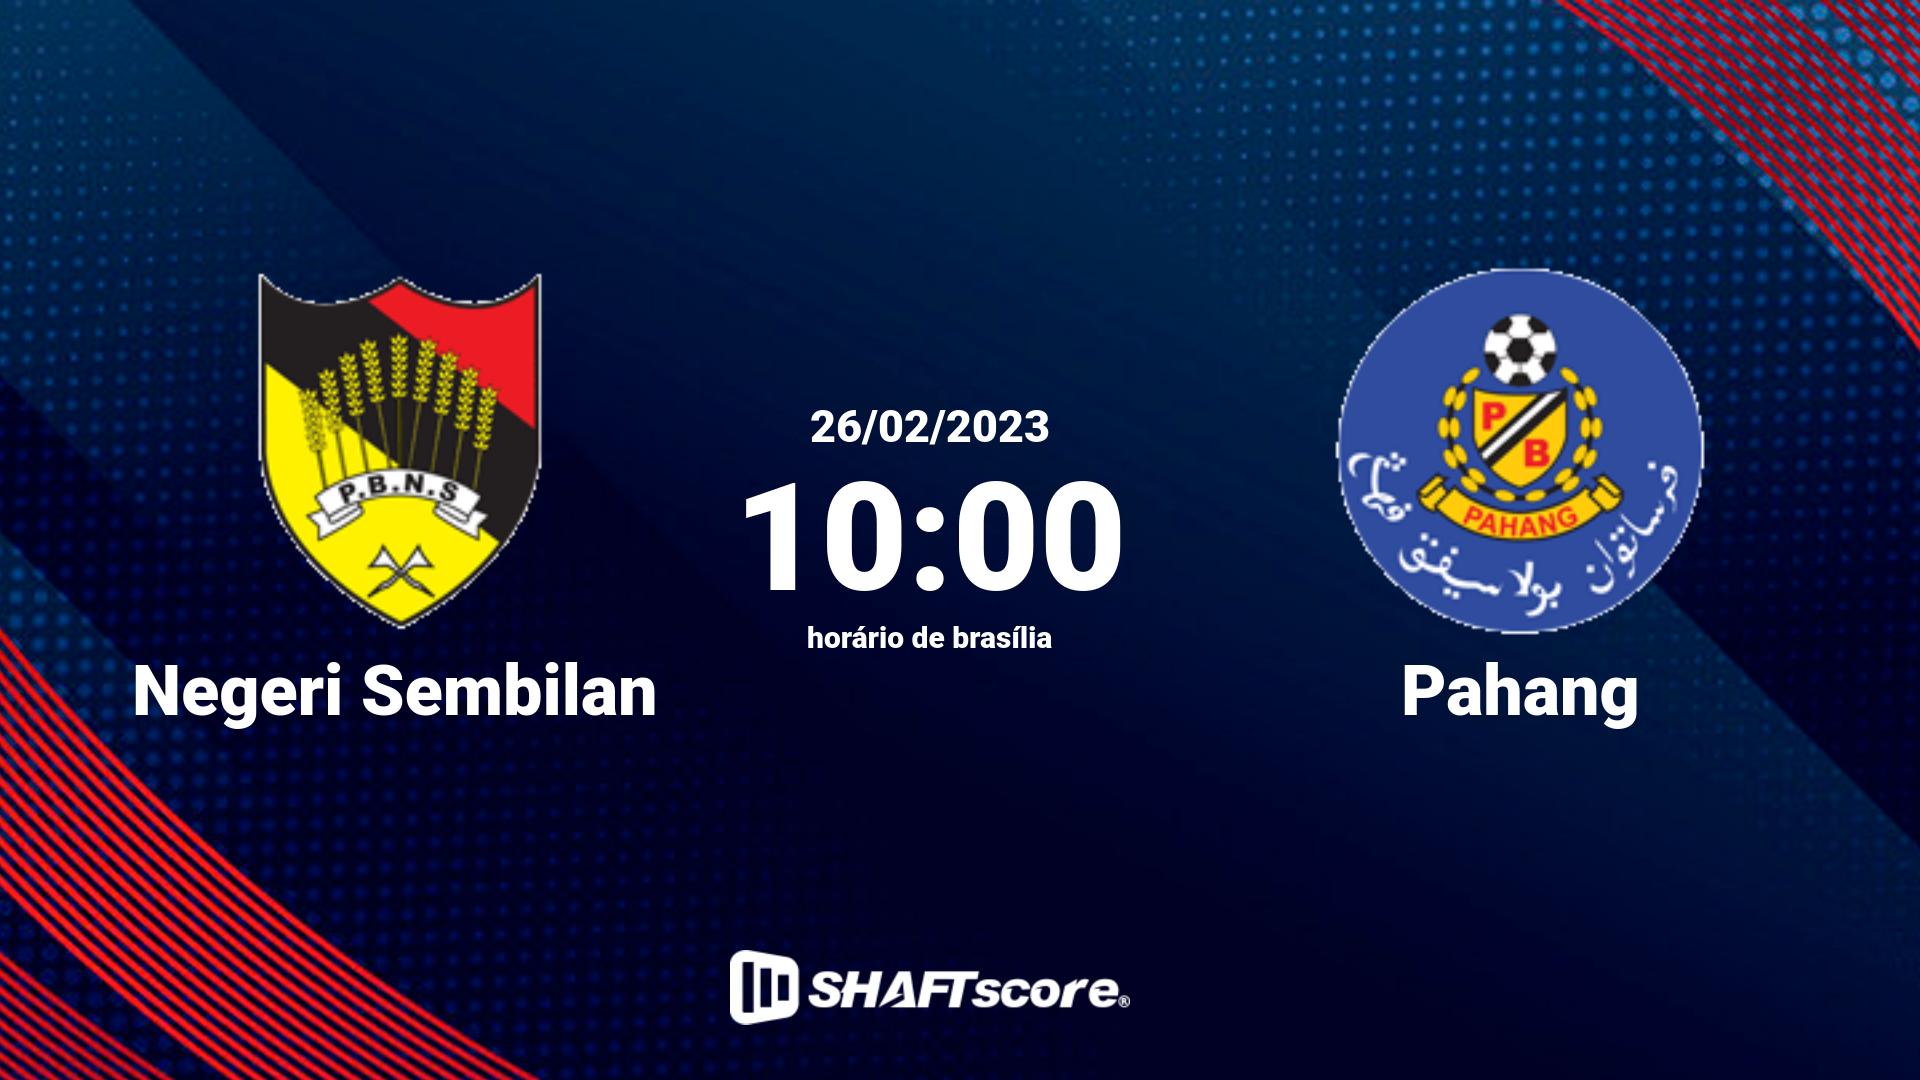 Estatísticas do jogo Negeri Sembilan vs Pahang 26.02 10:00